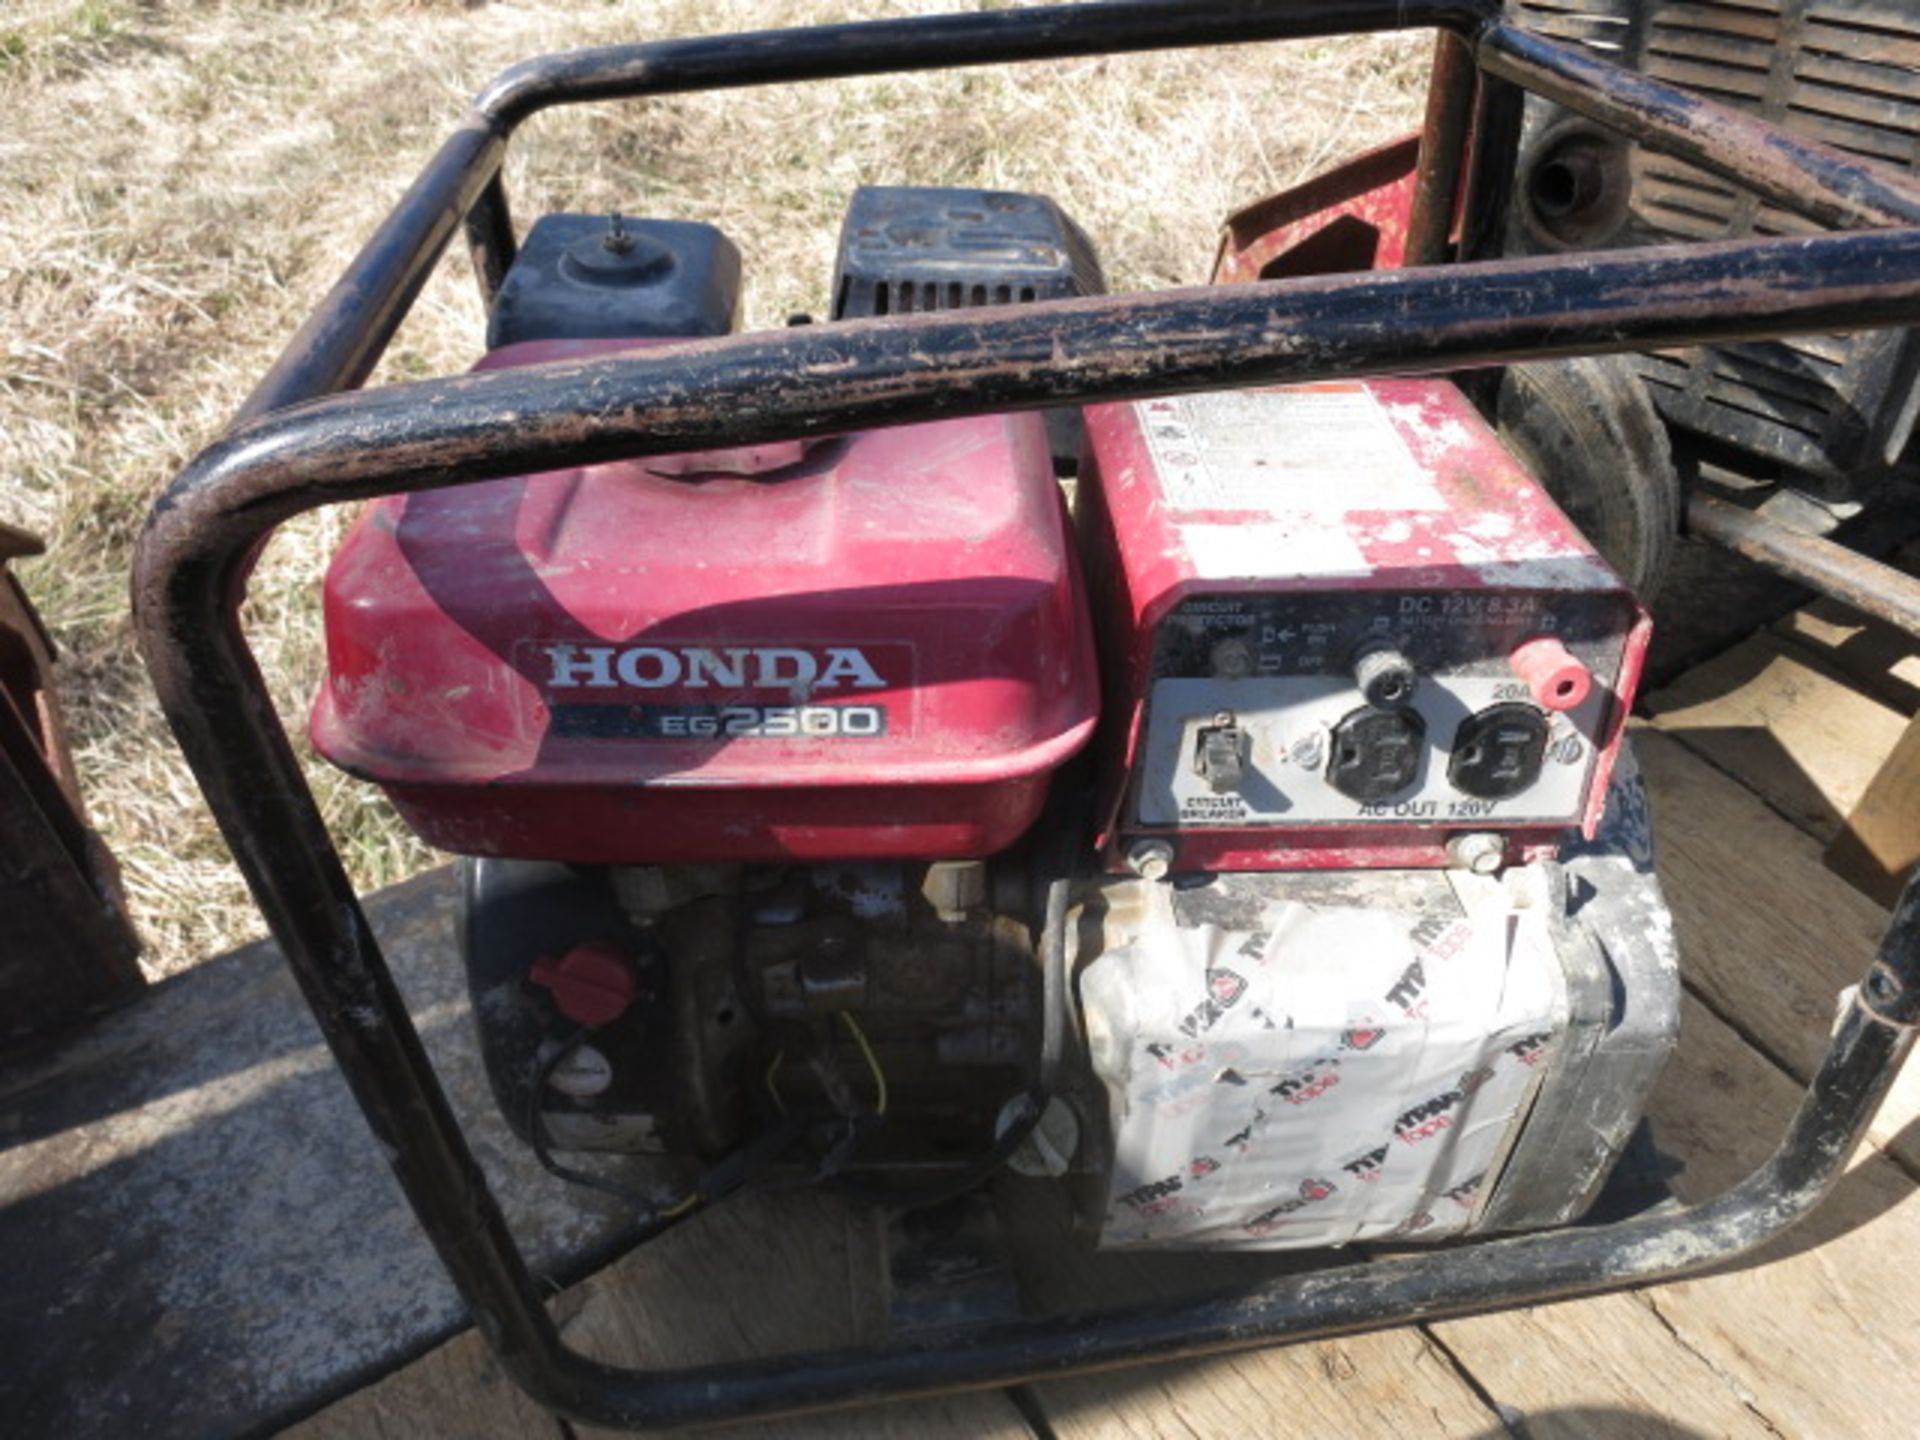 Honda Eg 2500 Generator - Image 2 of 3